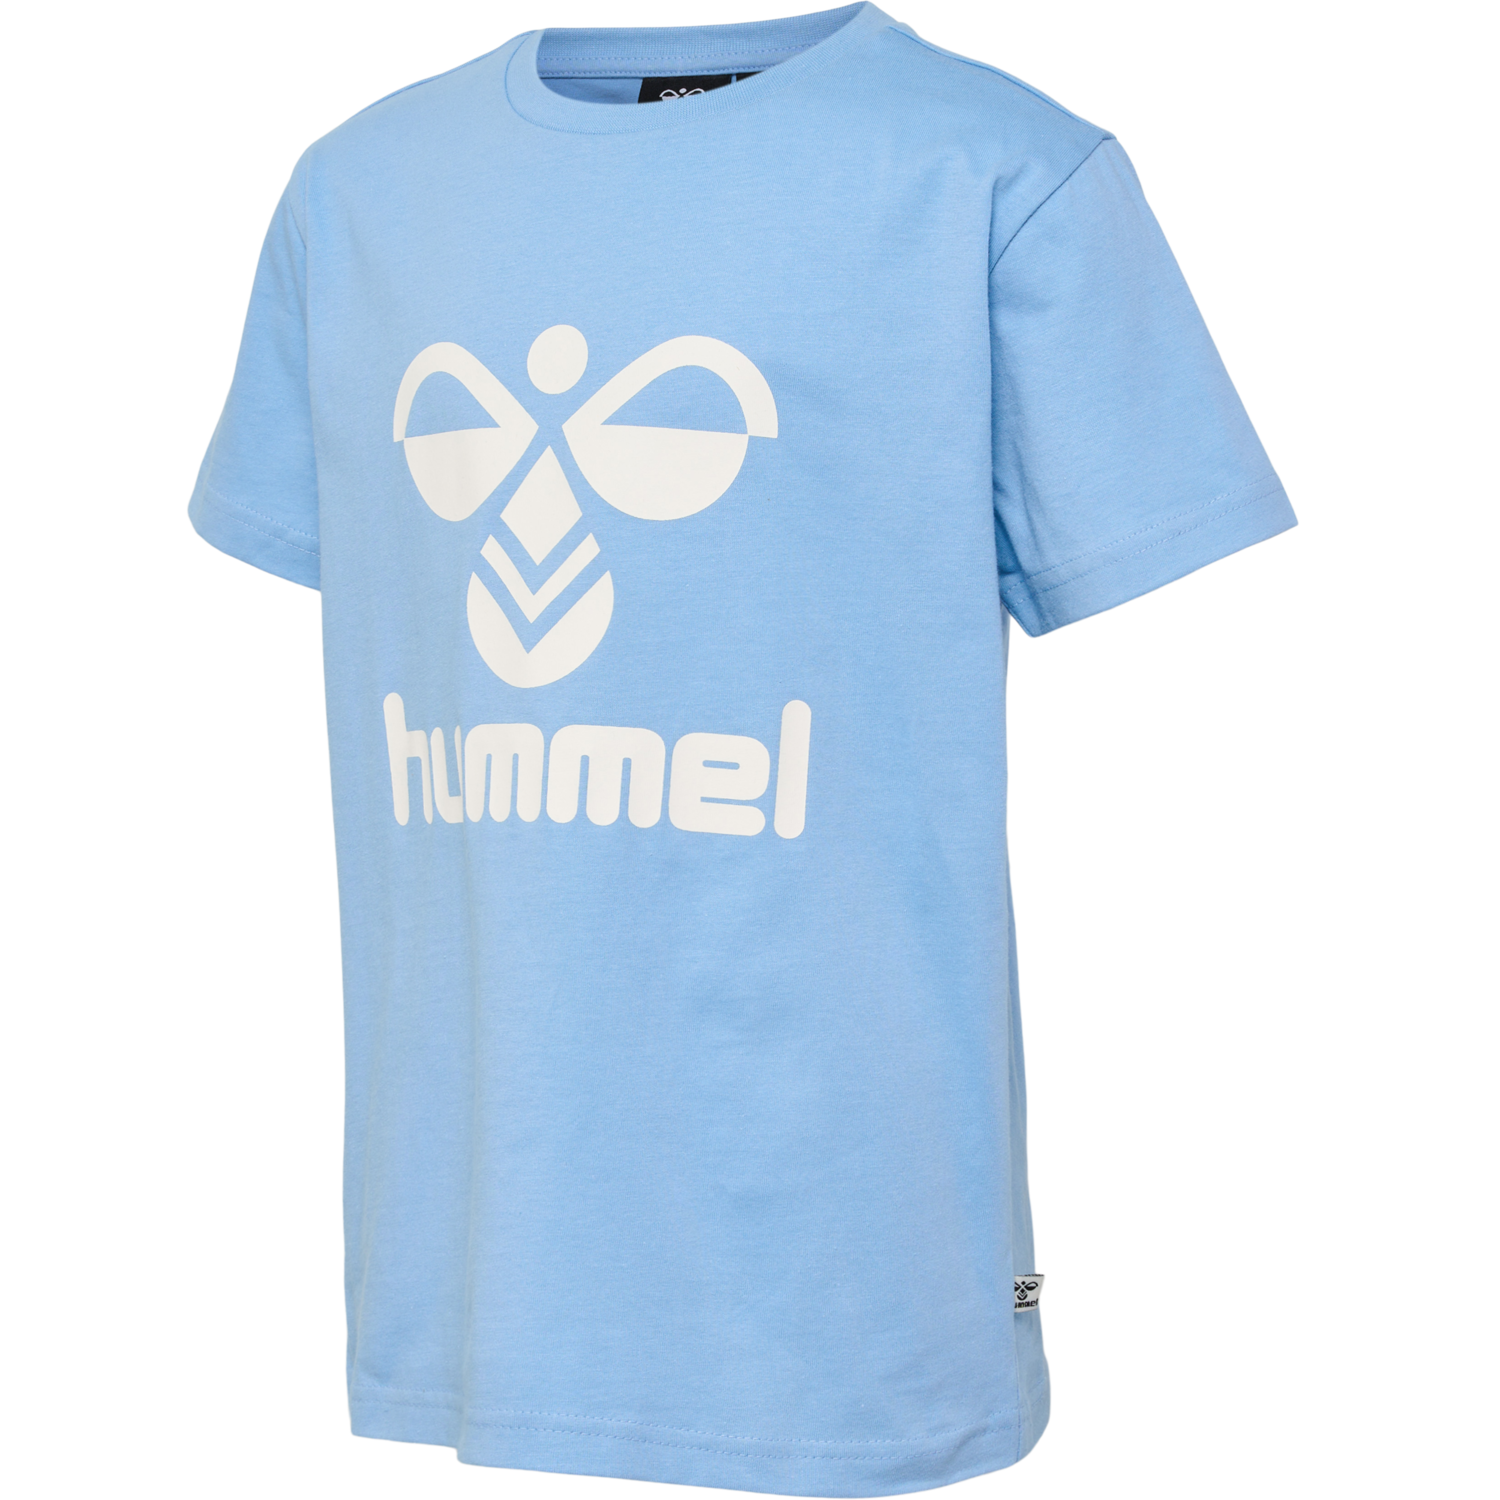 Hummel Hmltres T-Shirt S/S, - SPORT barn AS t-skjorte, AYA